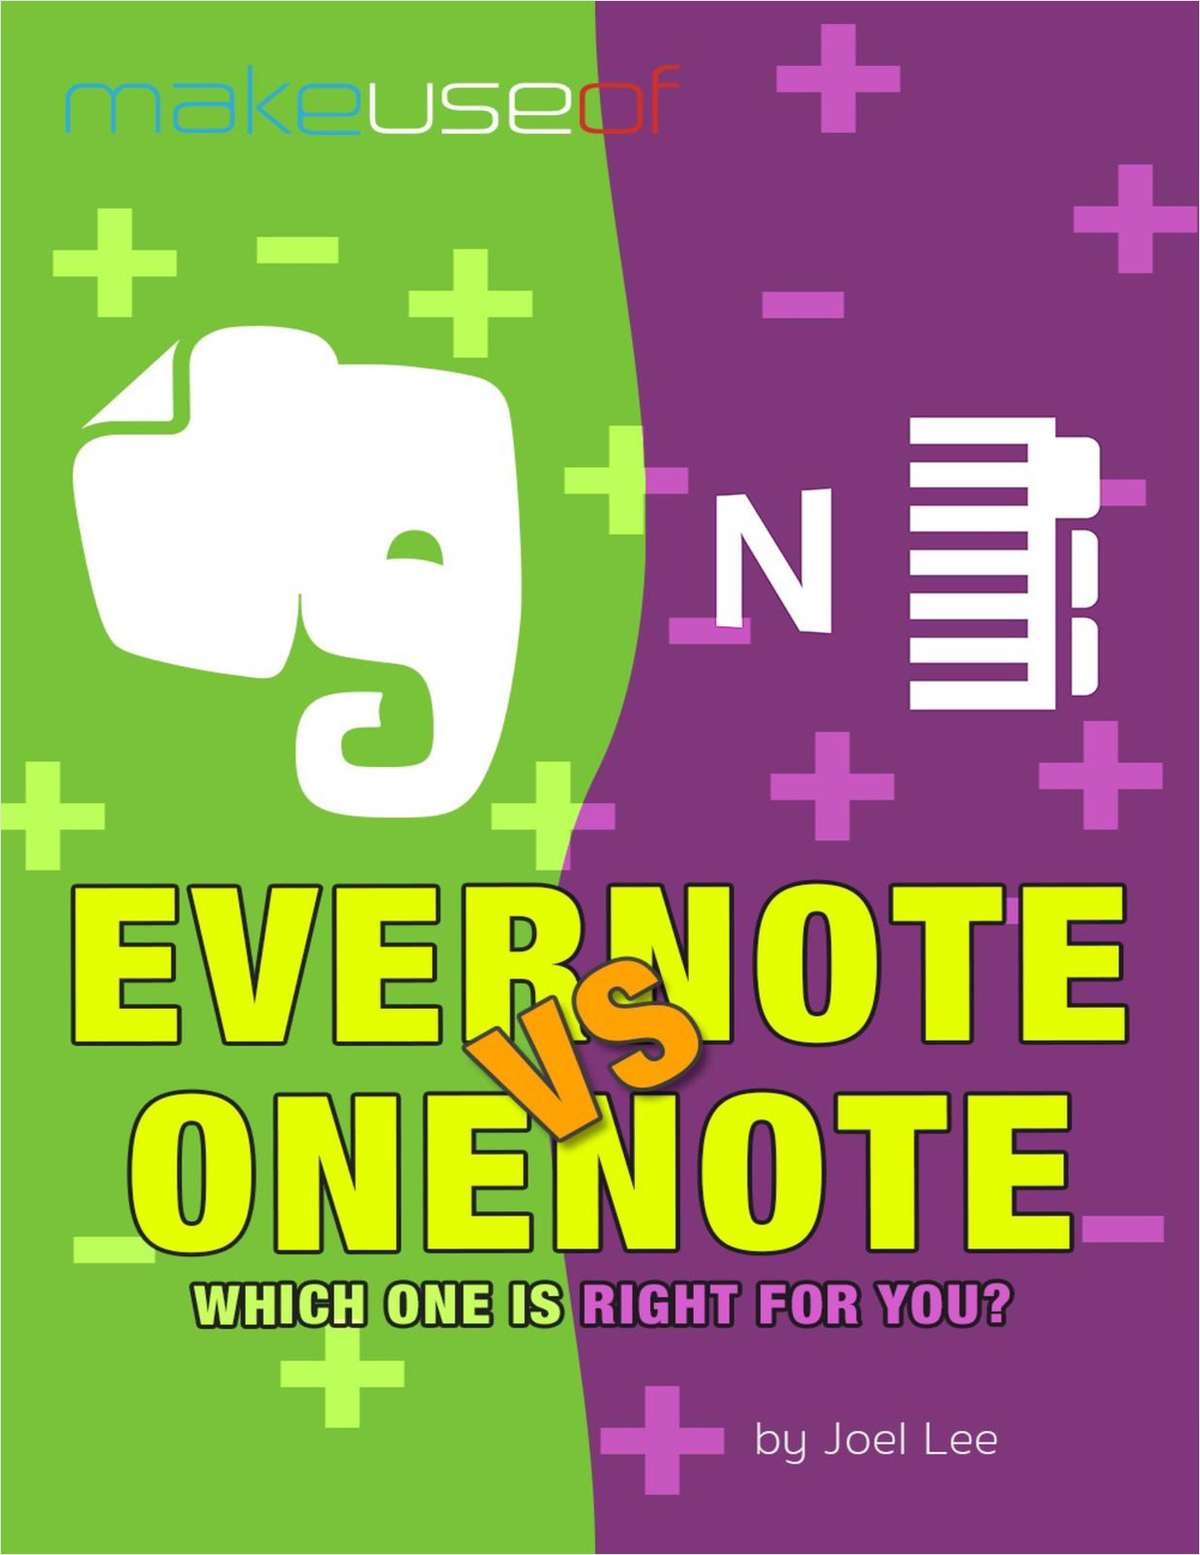 compare evernote and onenote